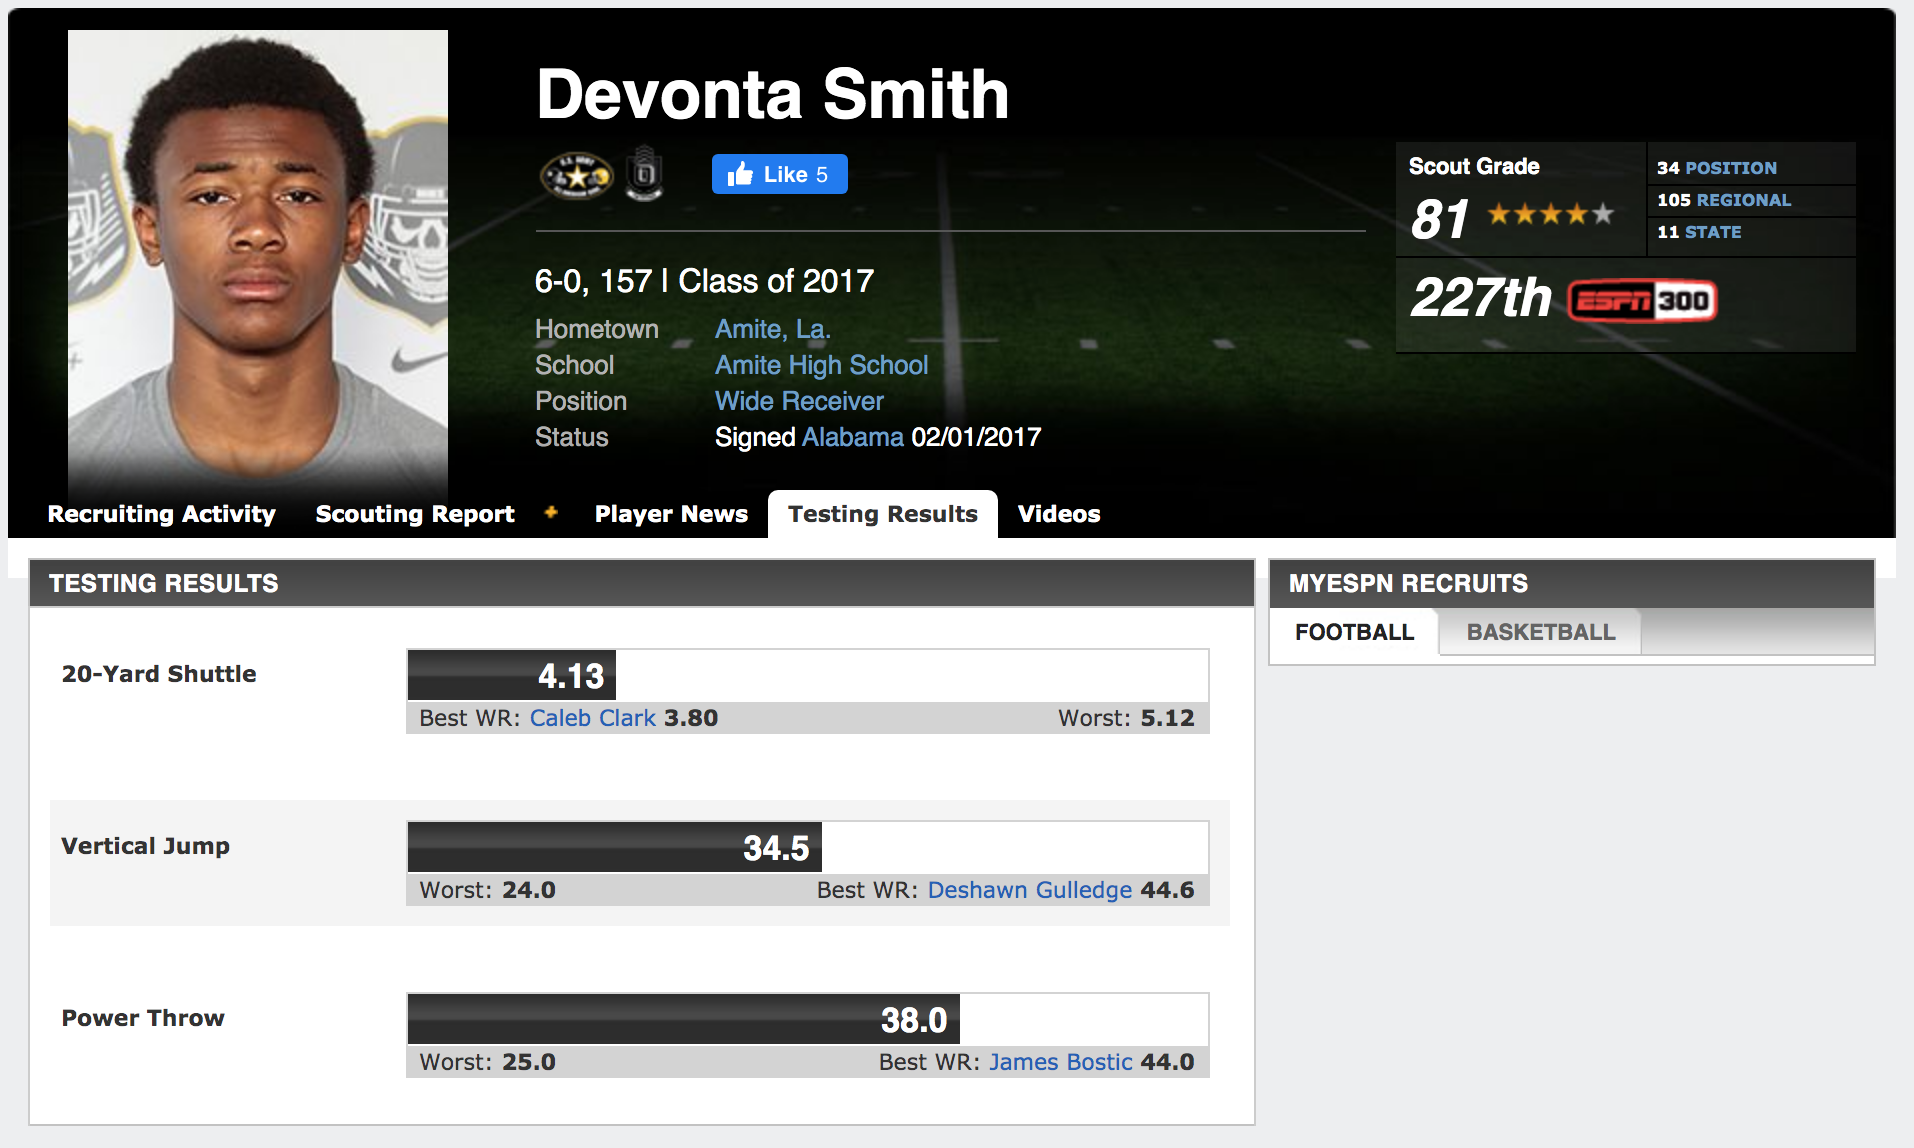 Devonta Smith's Football Recruiting Profile